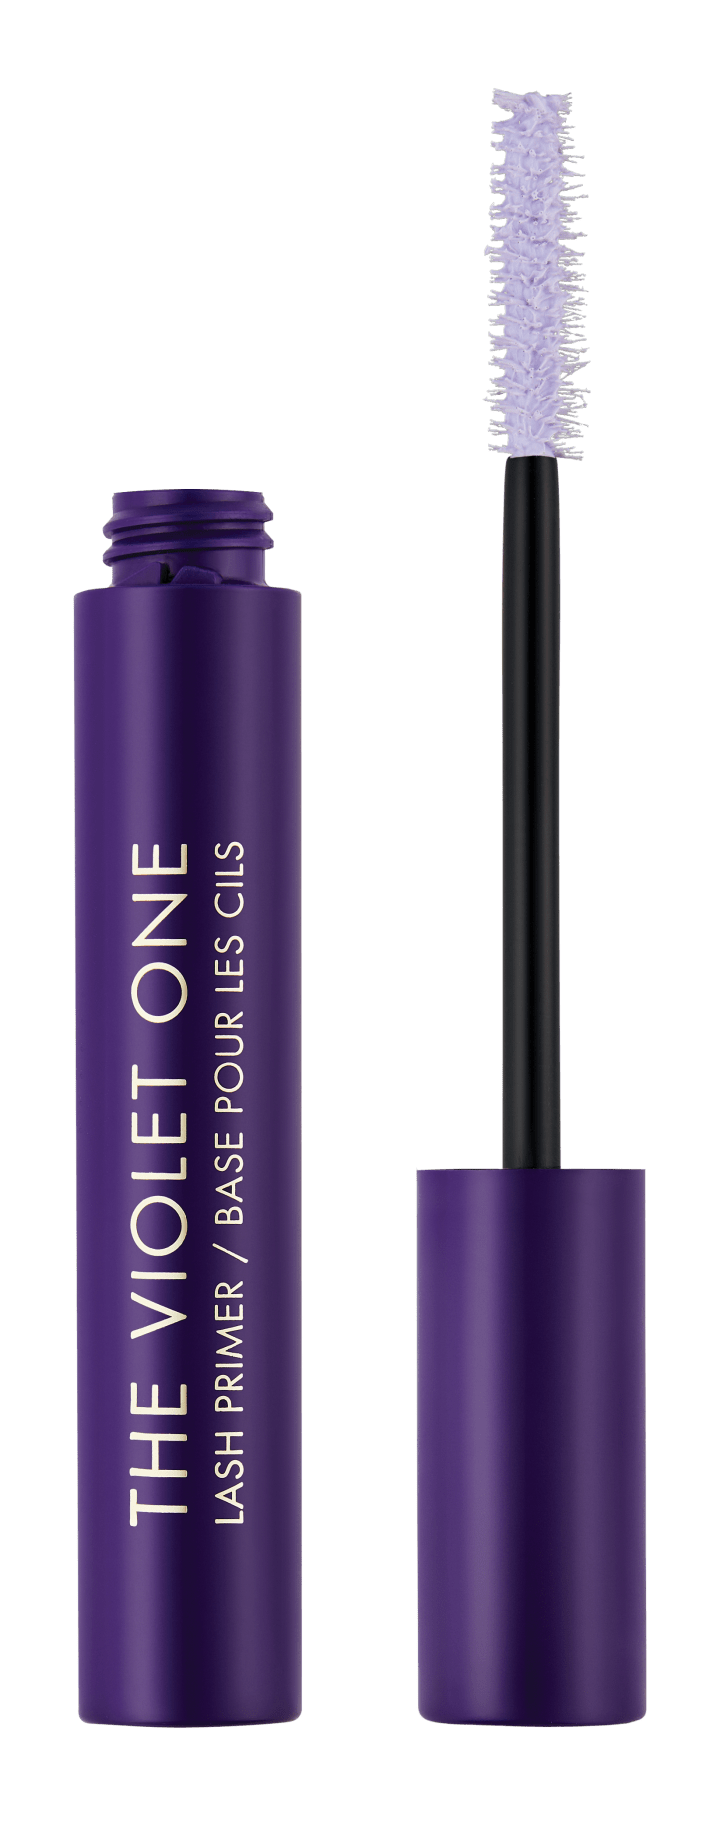 Milani Cosmetics The Violet One Lash Primer